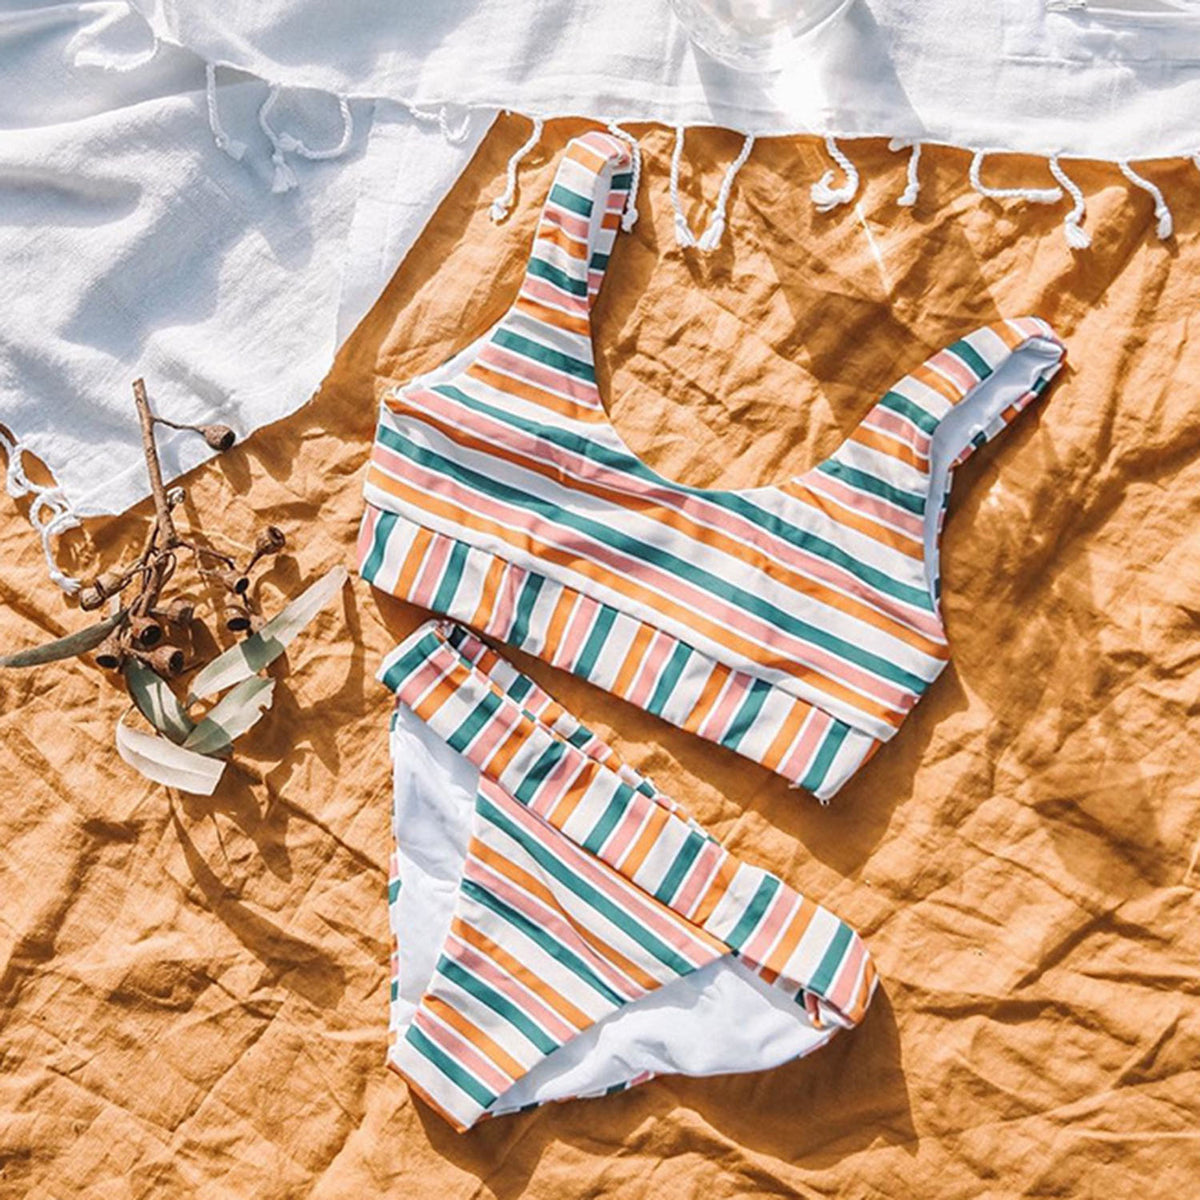 Rainbow Striped Bikini Swimsuit